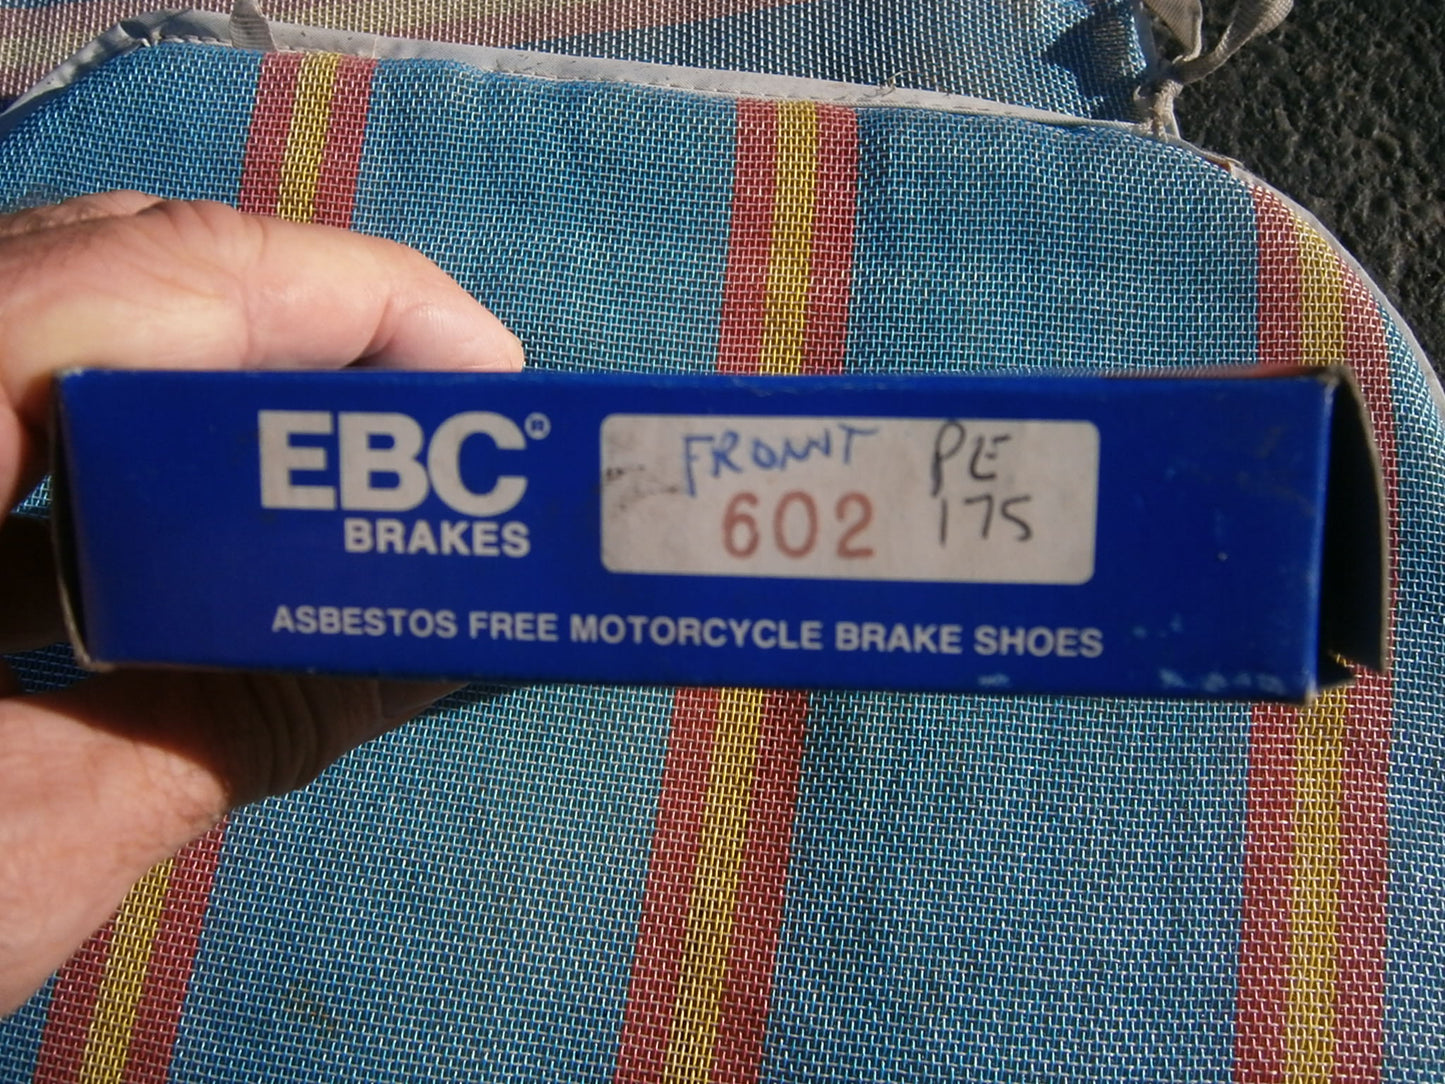 Suzuki PE175 NEW EBC Brake Shoes front or rear Part Number: EBC-602